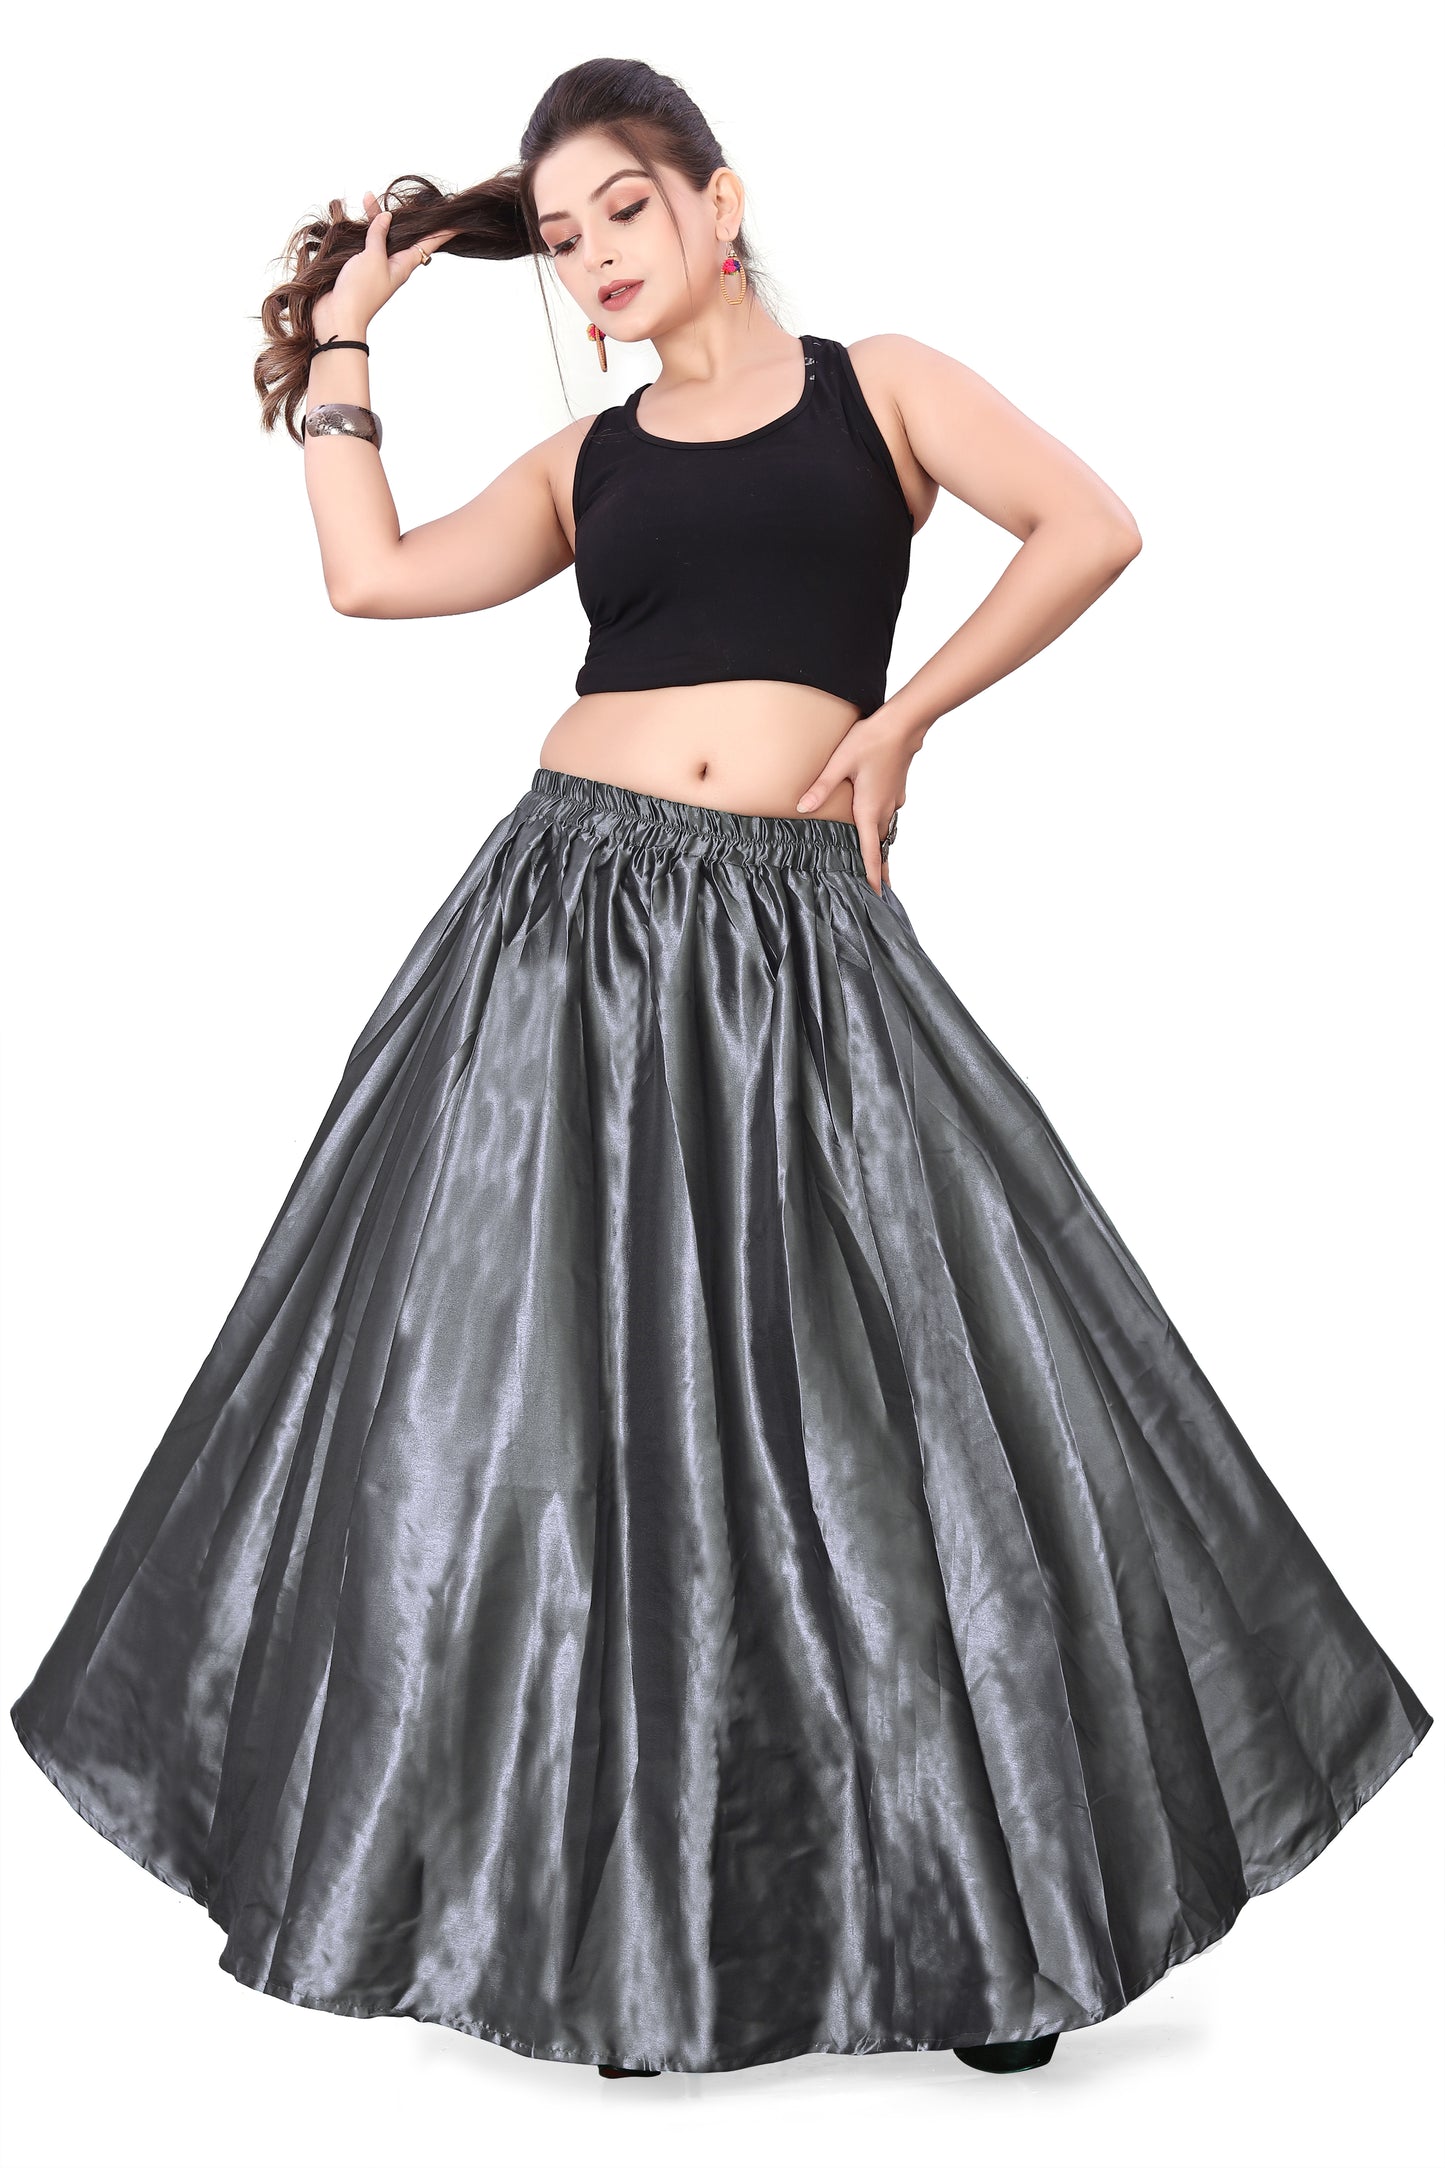 Satin Belly Dance Half Circle Skirt S9-Regular Size 1